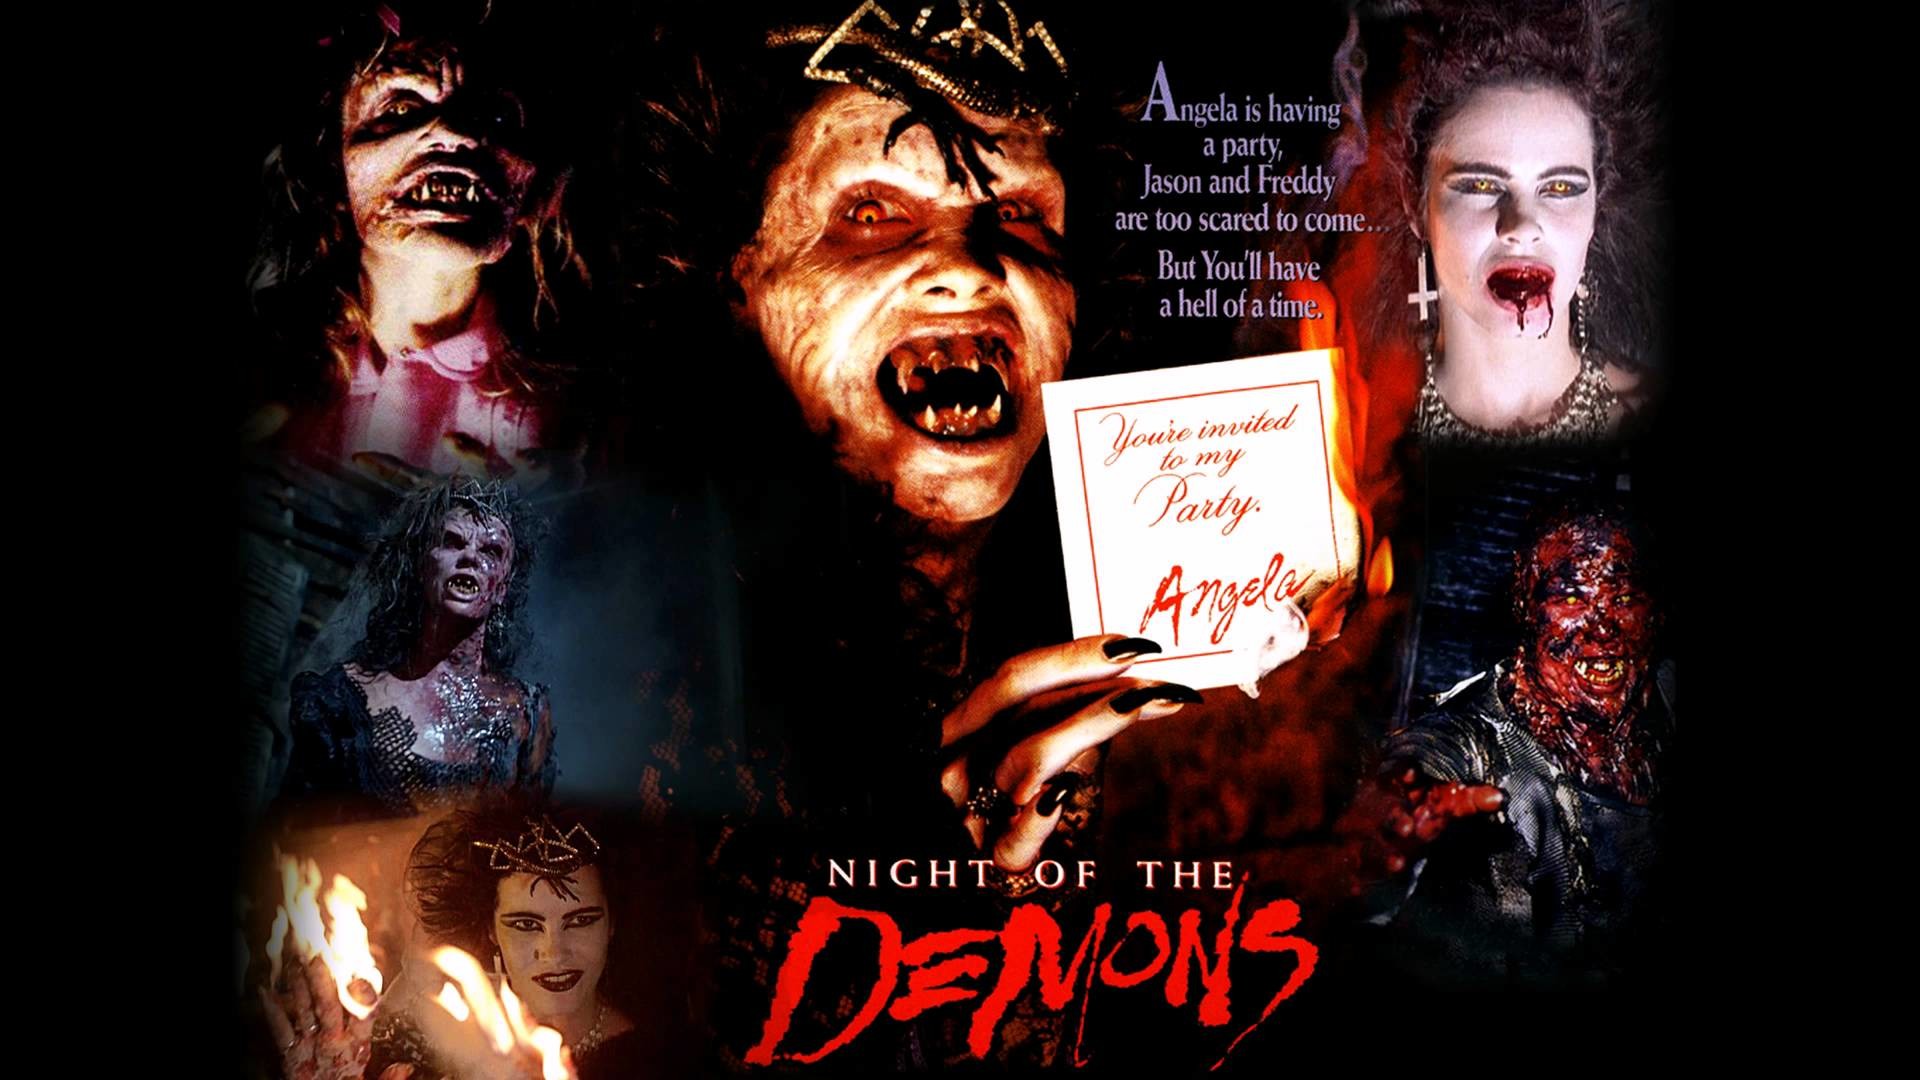 Night of the demons.